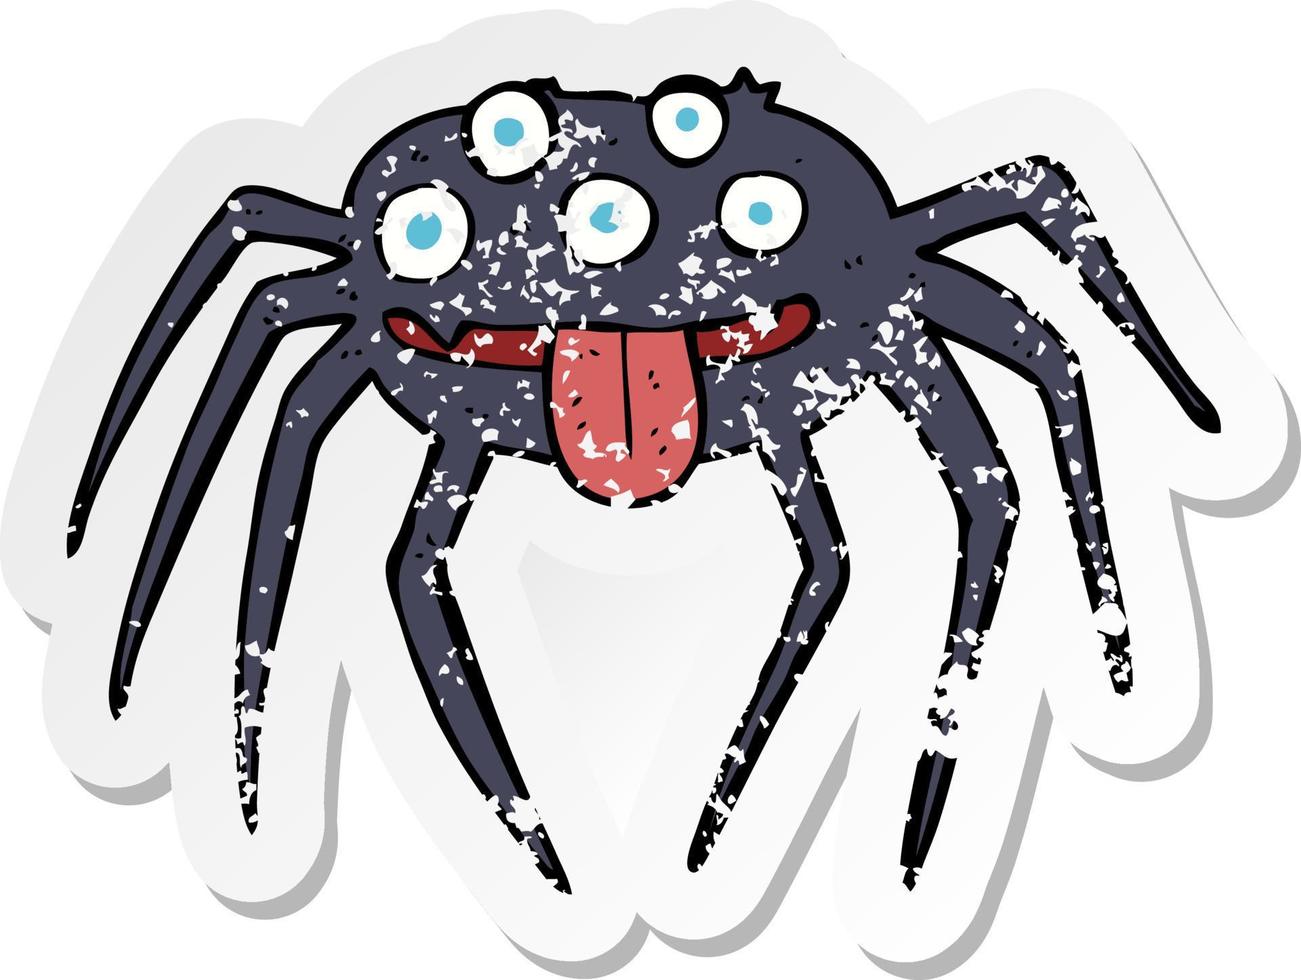 retro distressed sticker of a cartoon gross halloween spider vector